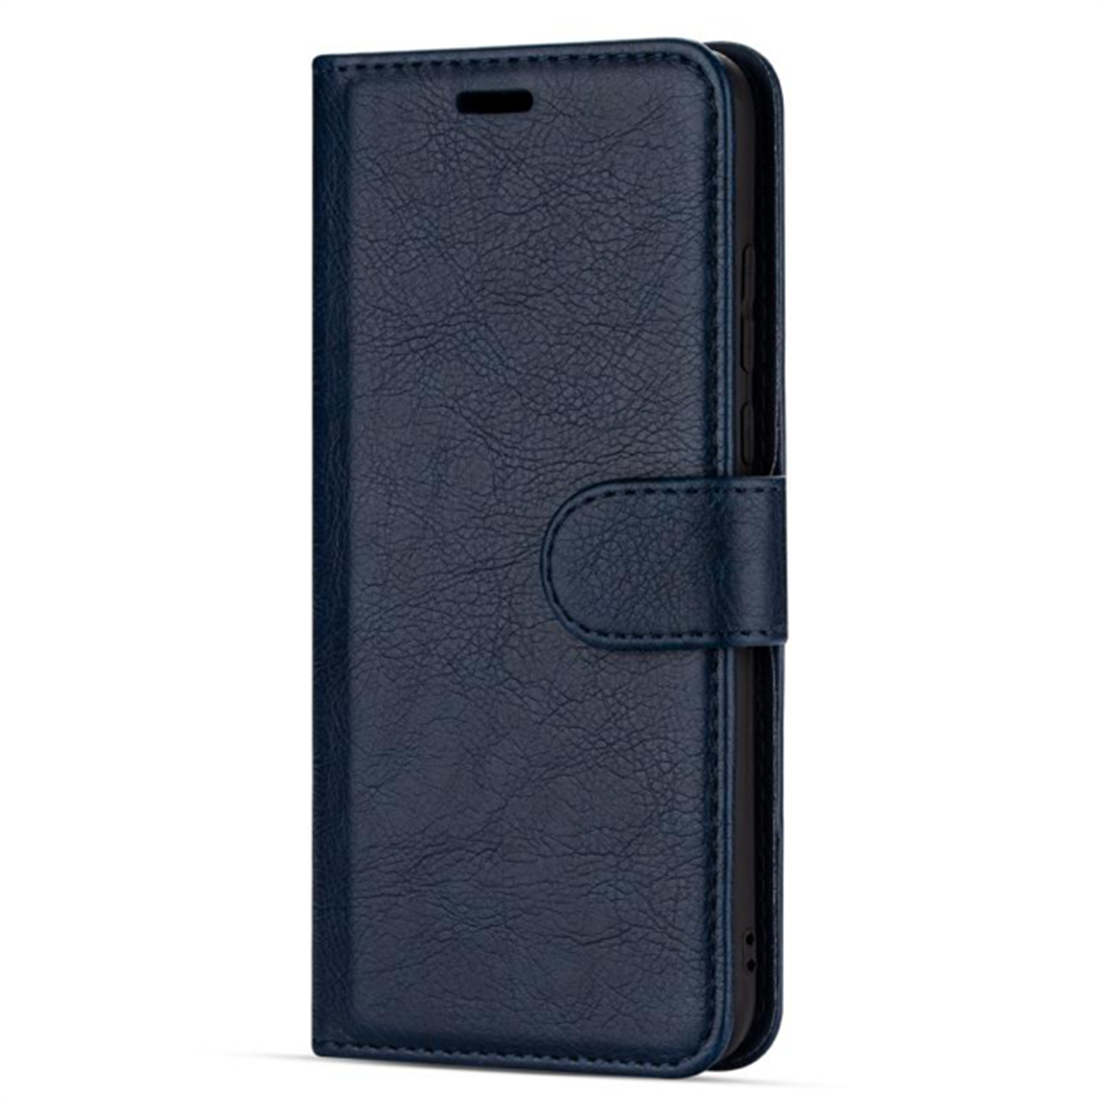 Samsung Galaxy S21 Plus Leatherette Blue Book Case - L